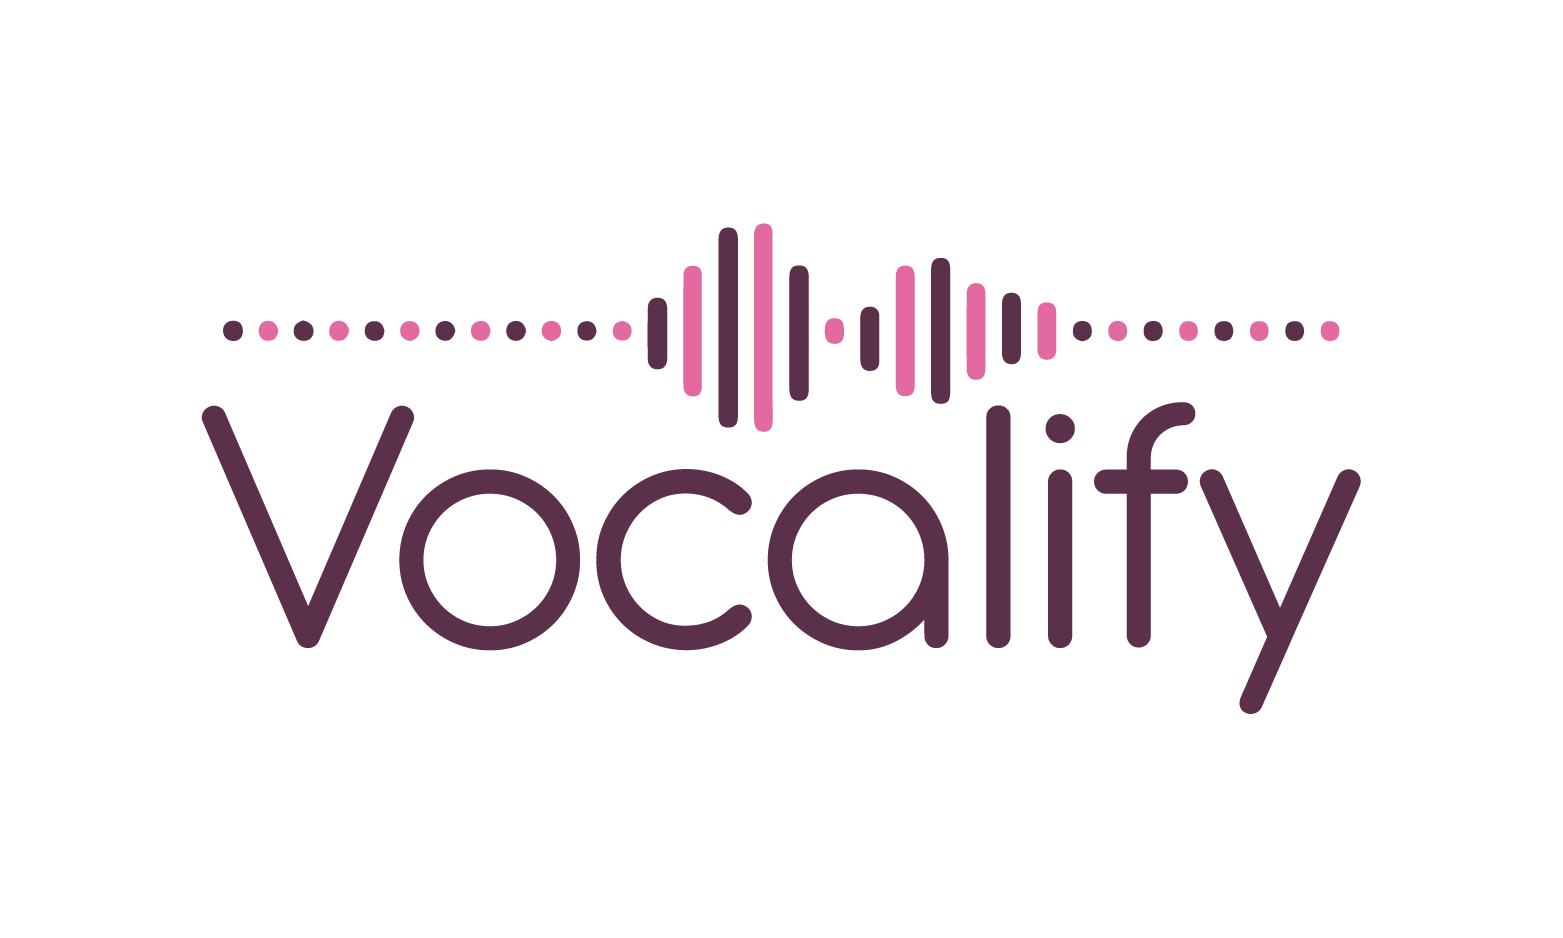 Vocalify.com - Creative brandable domain for sale